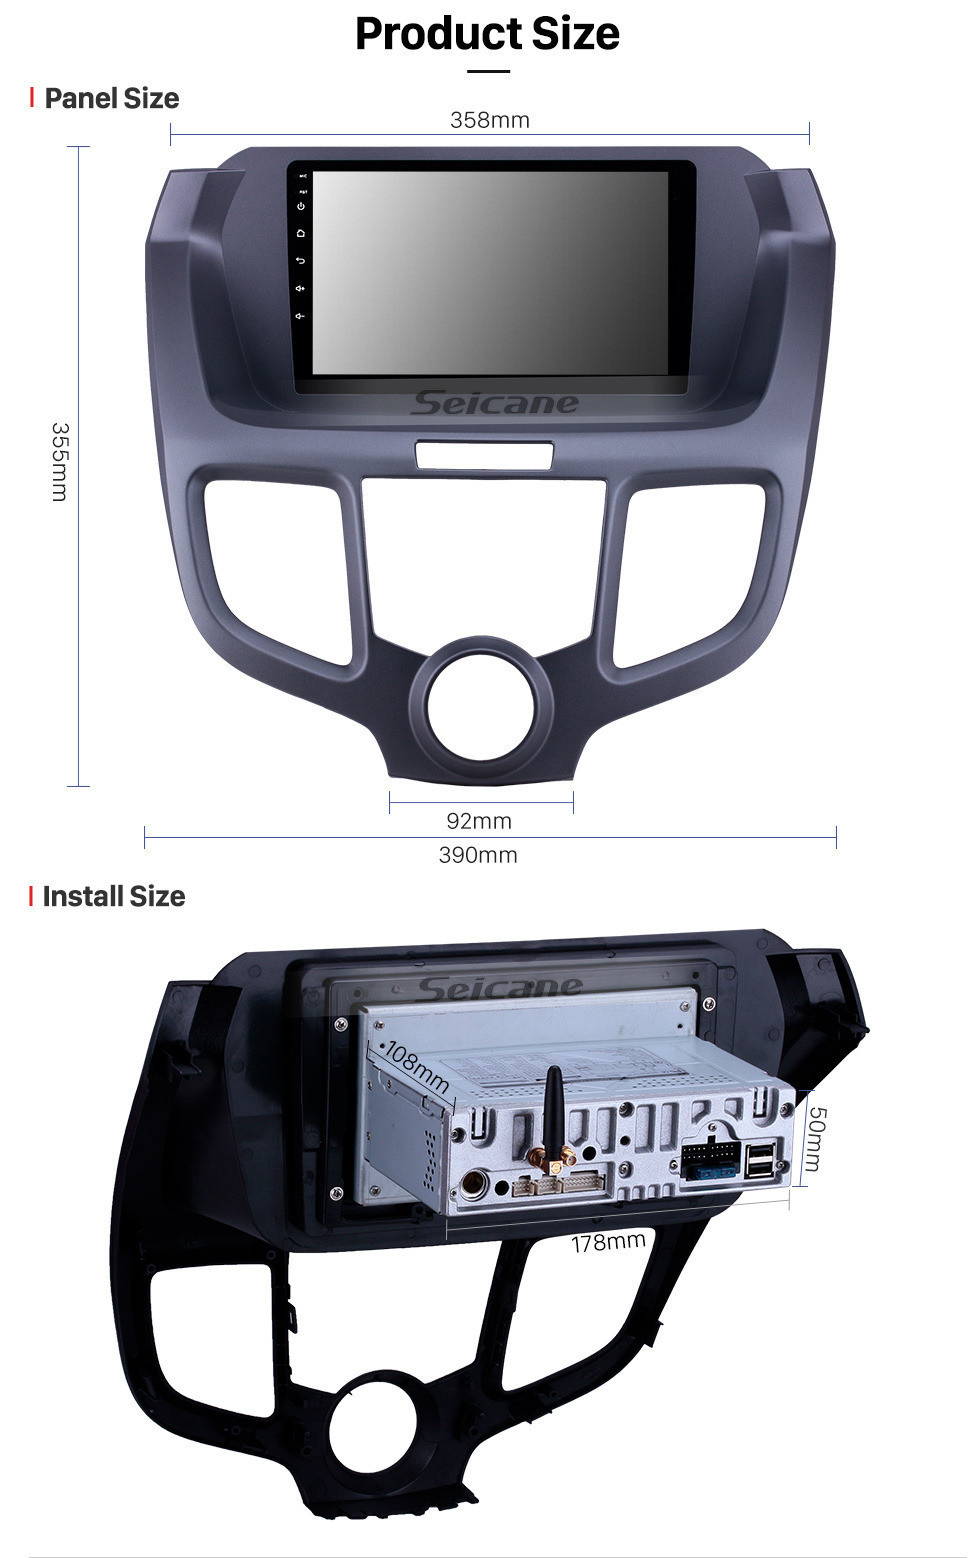 Seicane 2004-2008 Honda Odyssey Android 11.0 9 pulgadas Navegación GPS Radio Bluetooth HD Pantalla táctil WIFI USB AUX Carplay compatible TPMS SWC